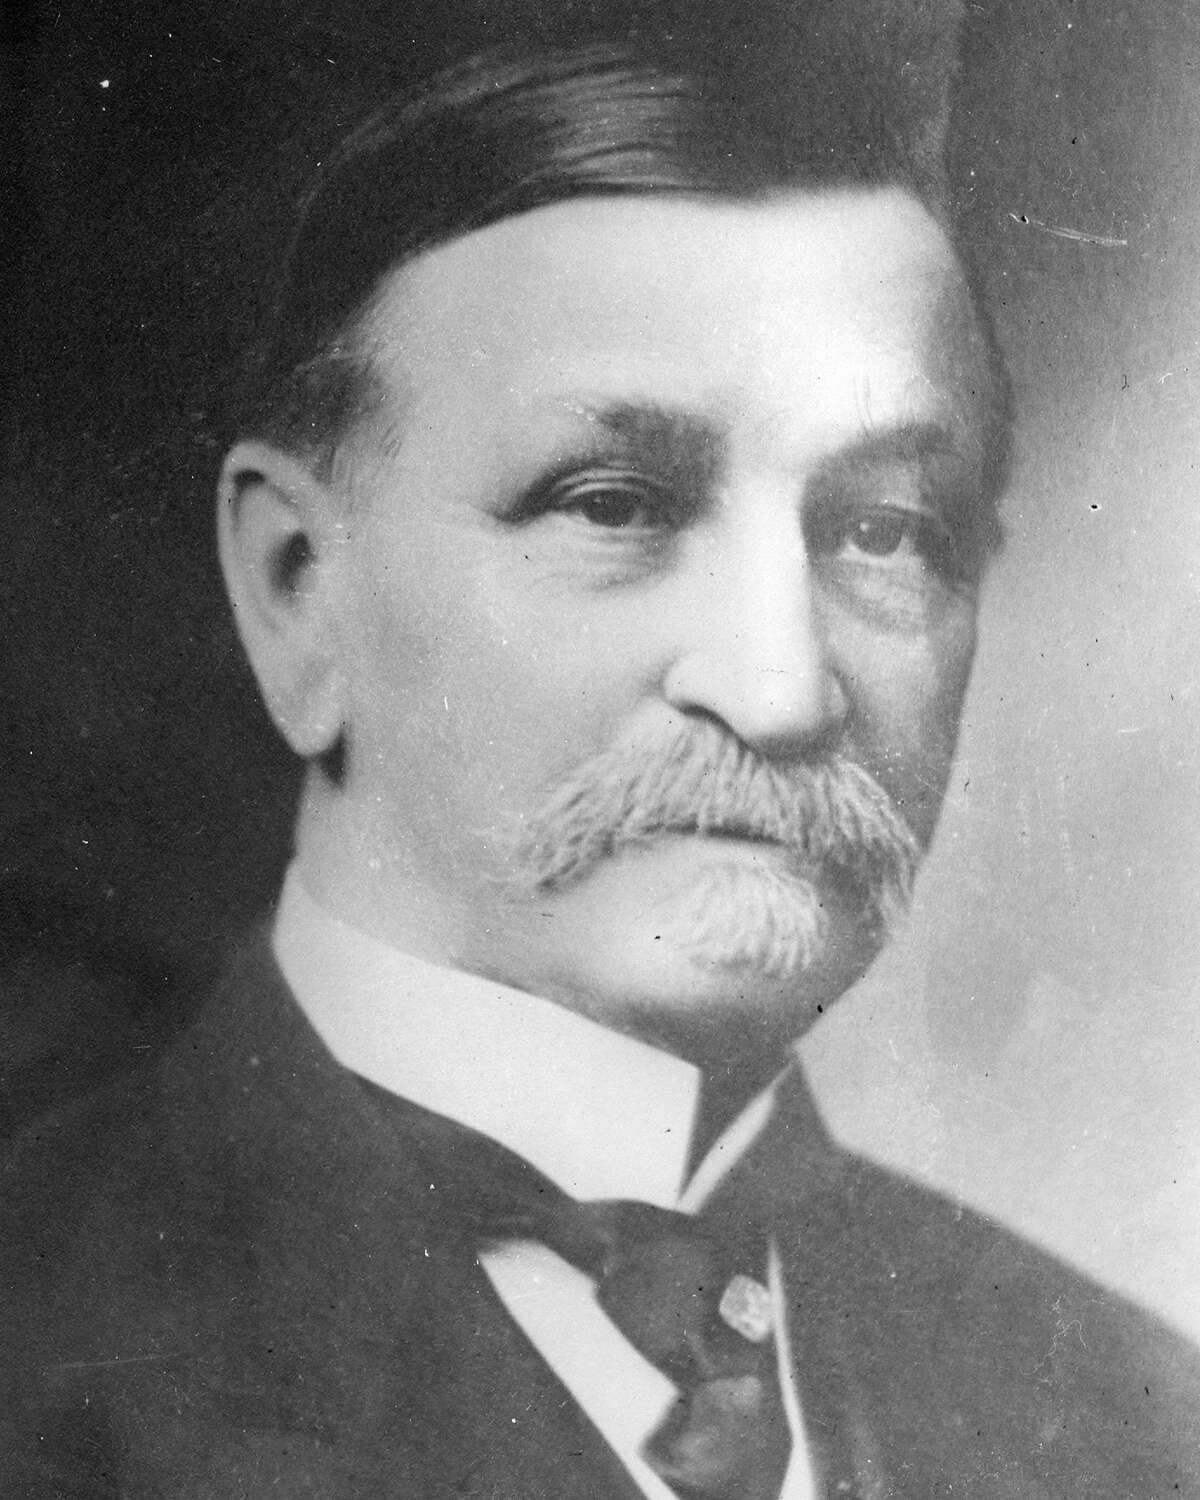 Local businessman, E. Golden Filer passed away on April 13, 1921.